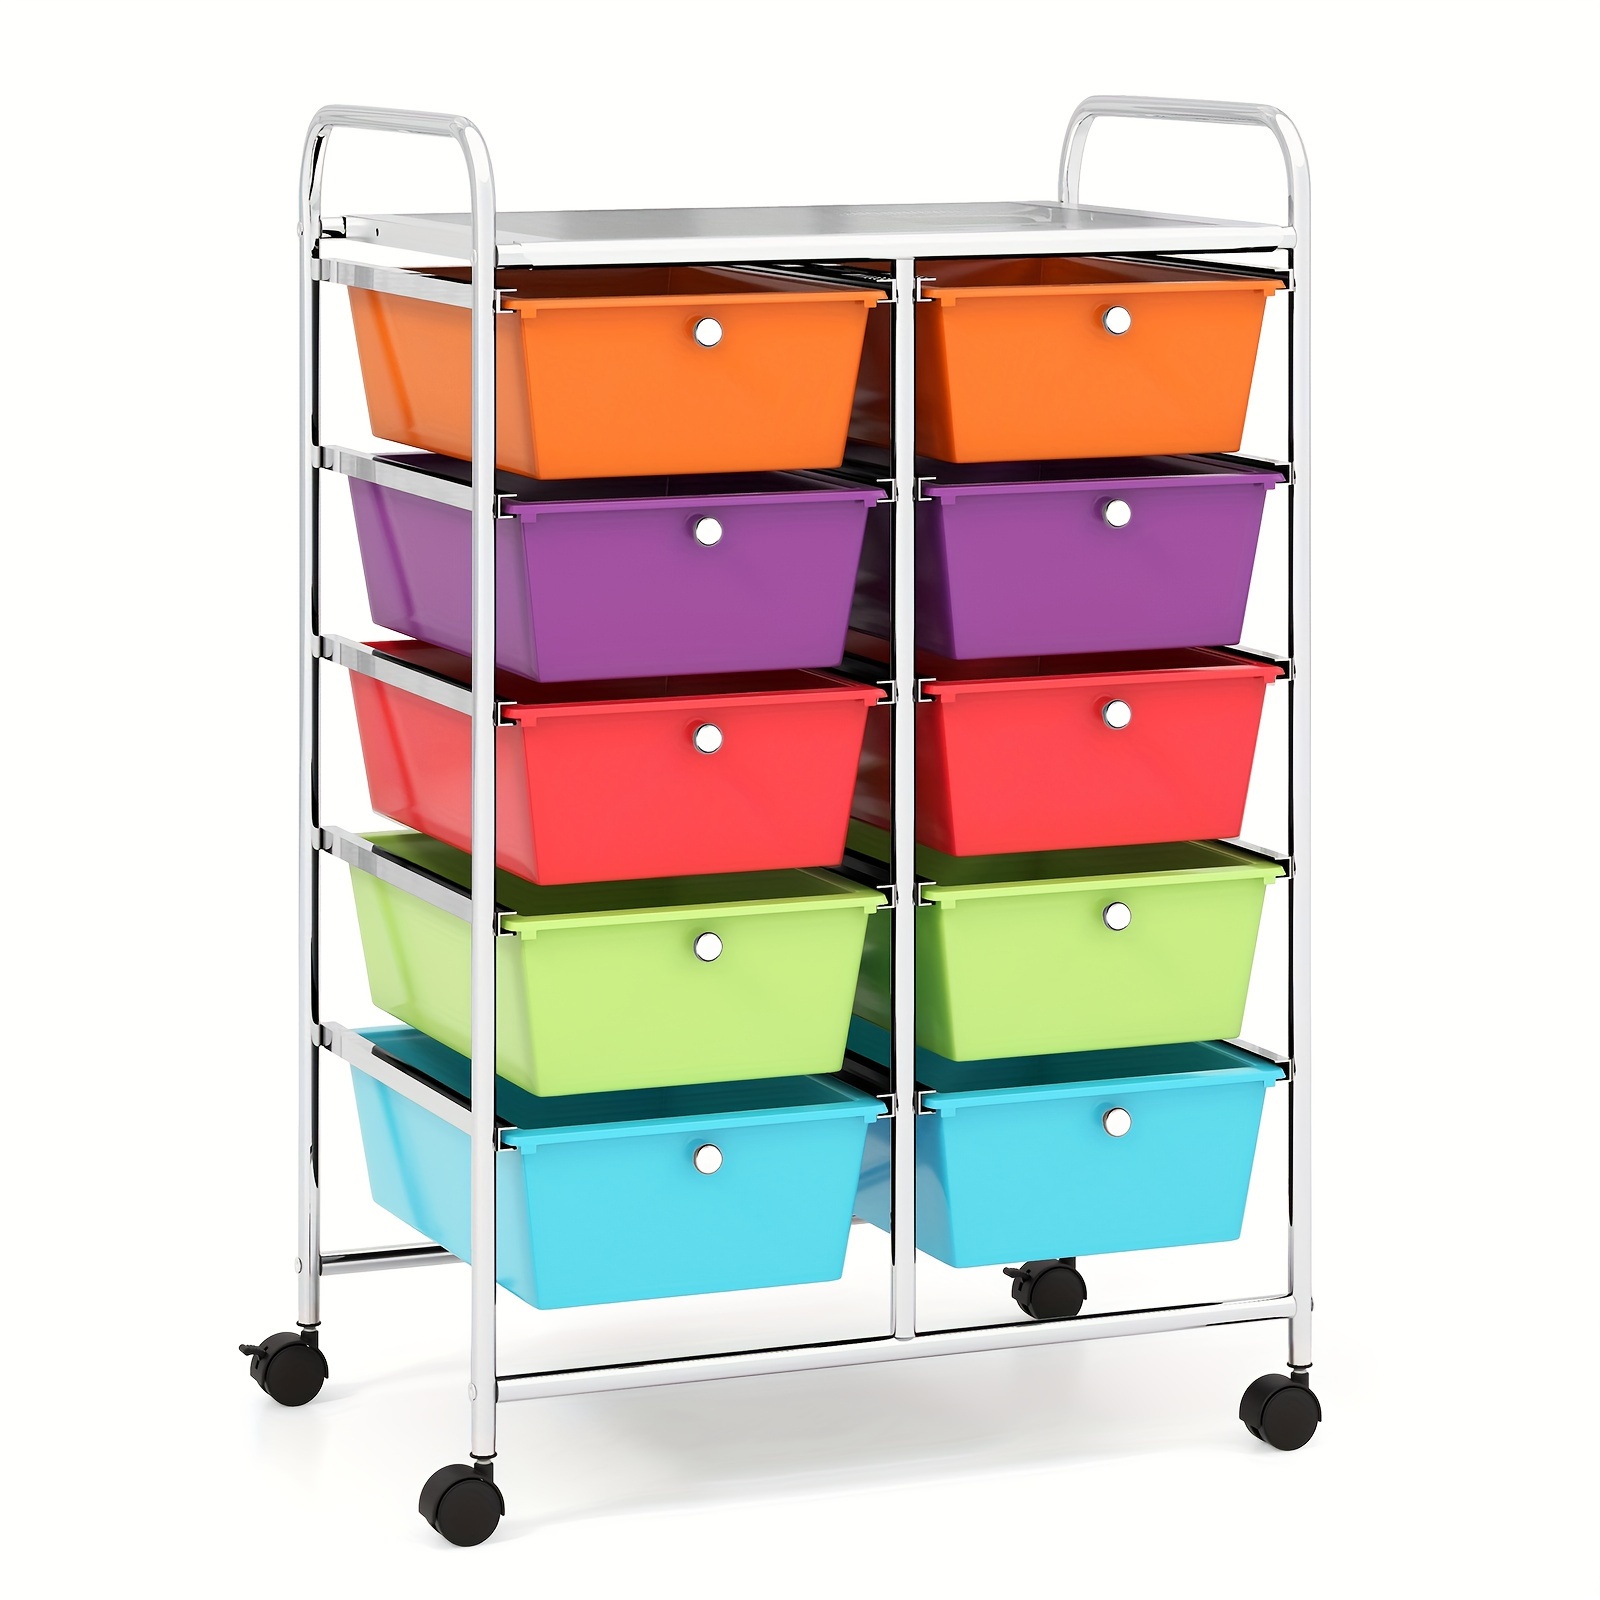 

10-drawer Storage Cart Utility Rolling Trolley Kitchen Organizer Multicolor